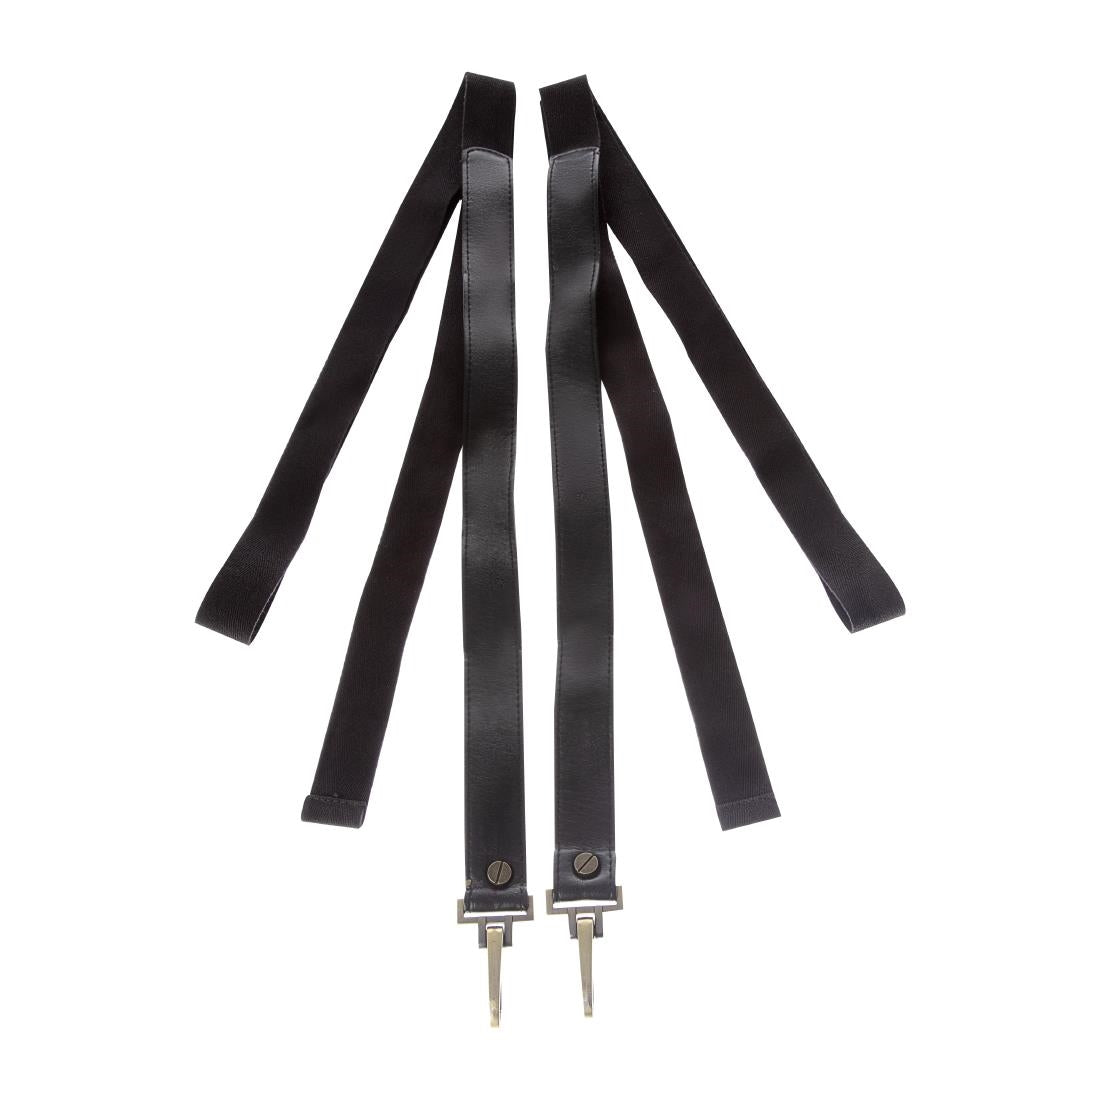 FT609 Southside Apron Spare Doghook PU strap Black (2 pack) JD Catering Equipment Solutions Ltd